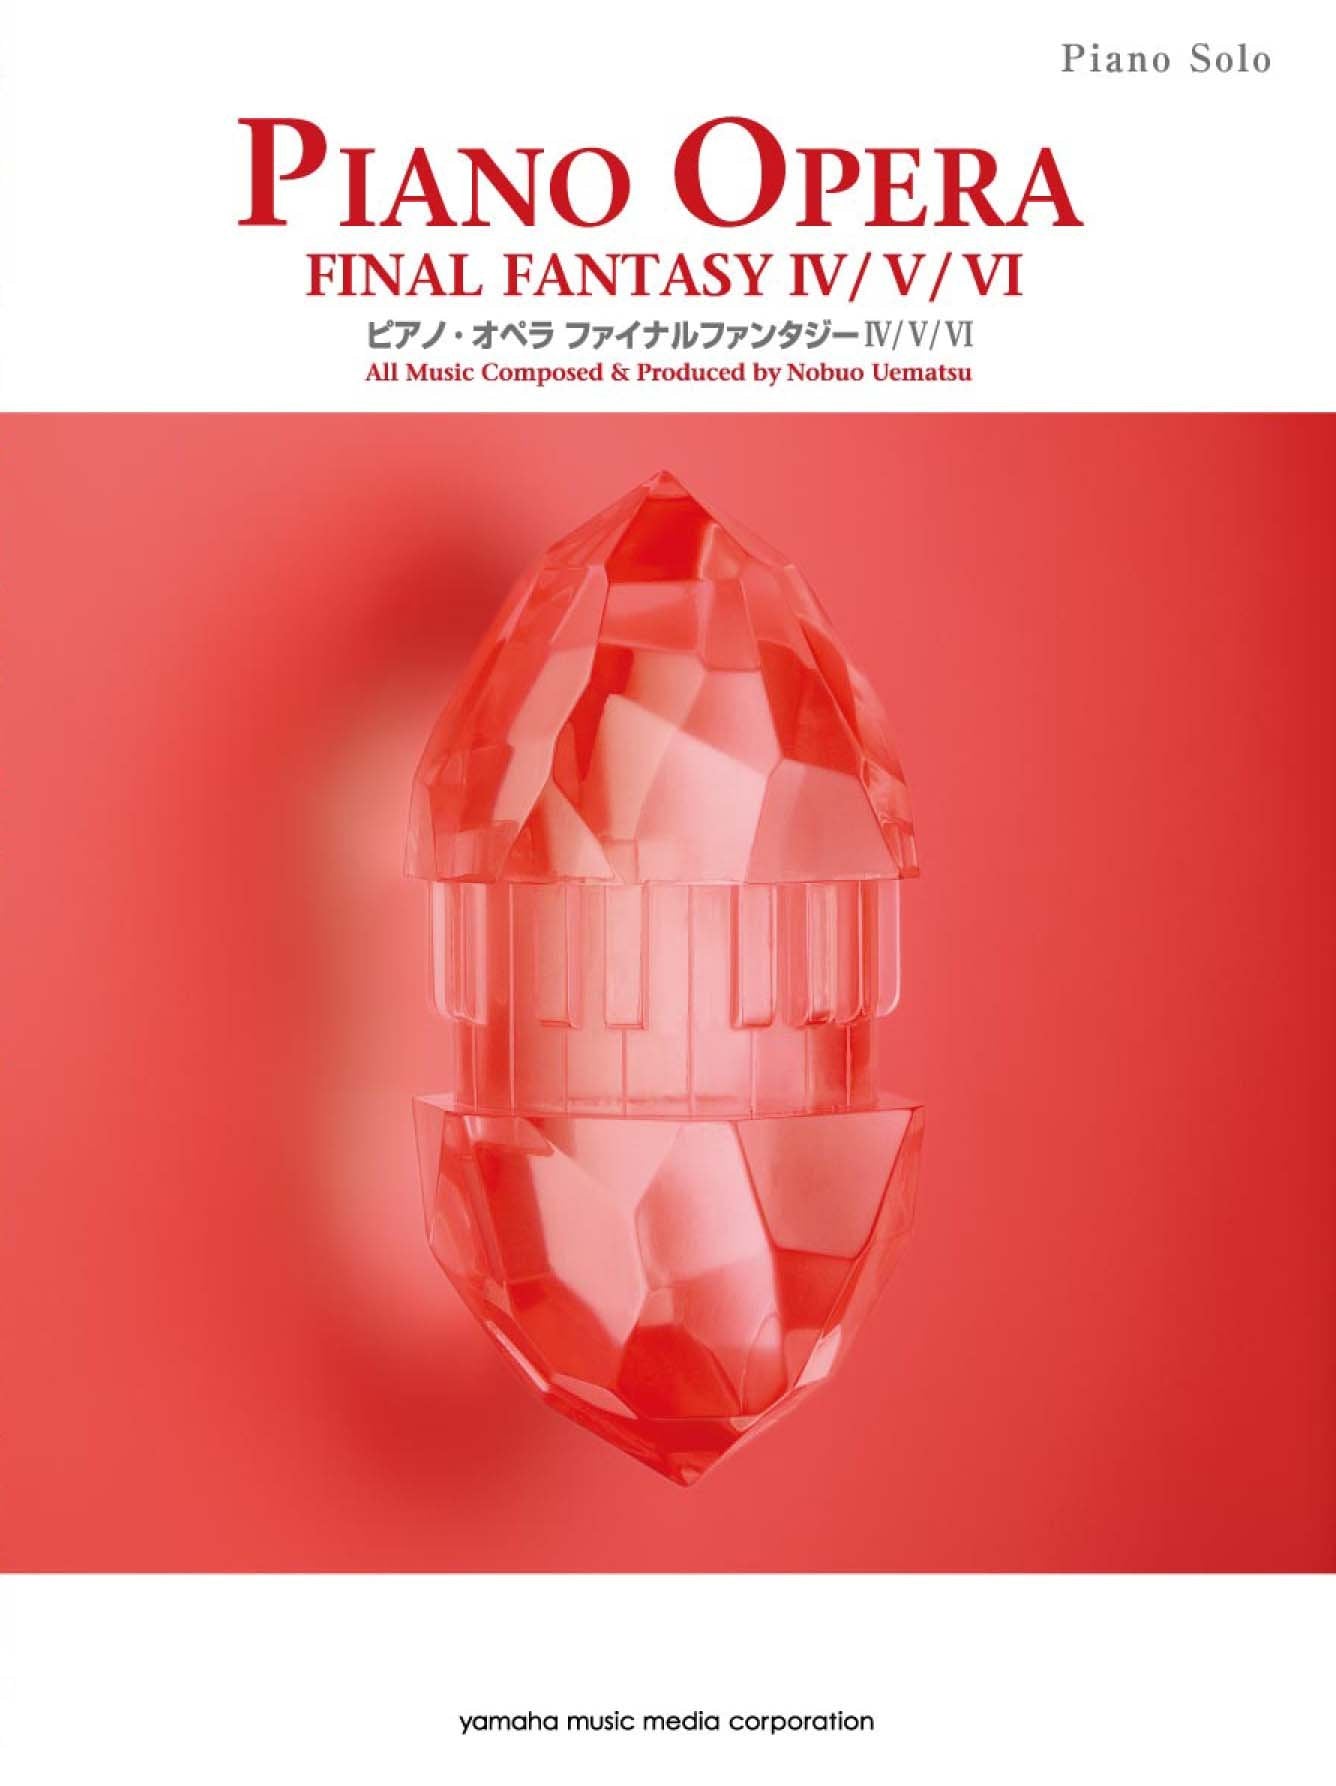 Final Fantasy IV/V/VI Advanced Piano Opera Sheet Music Book Soundtrack